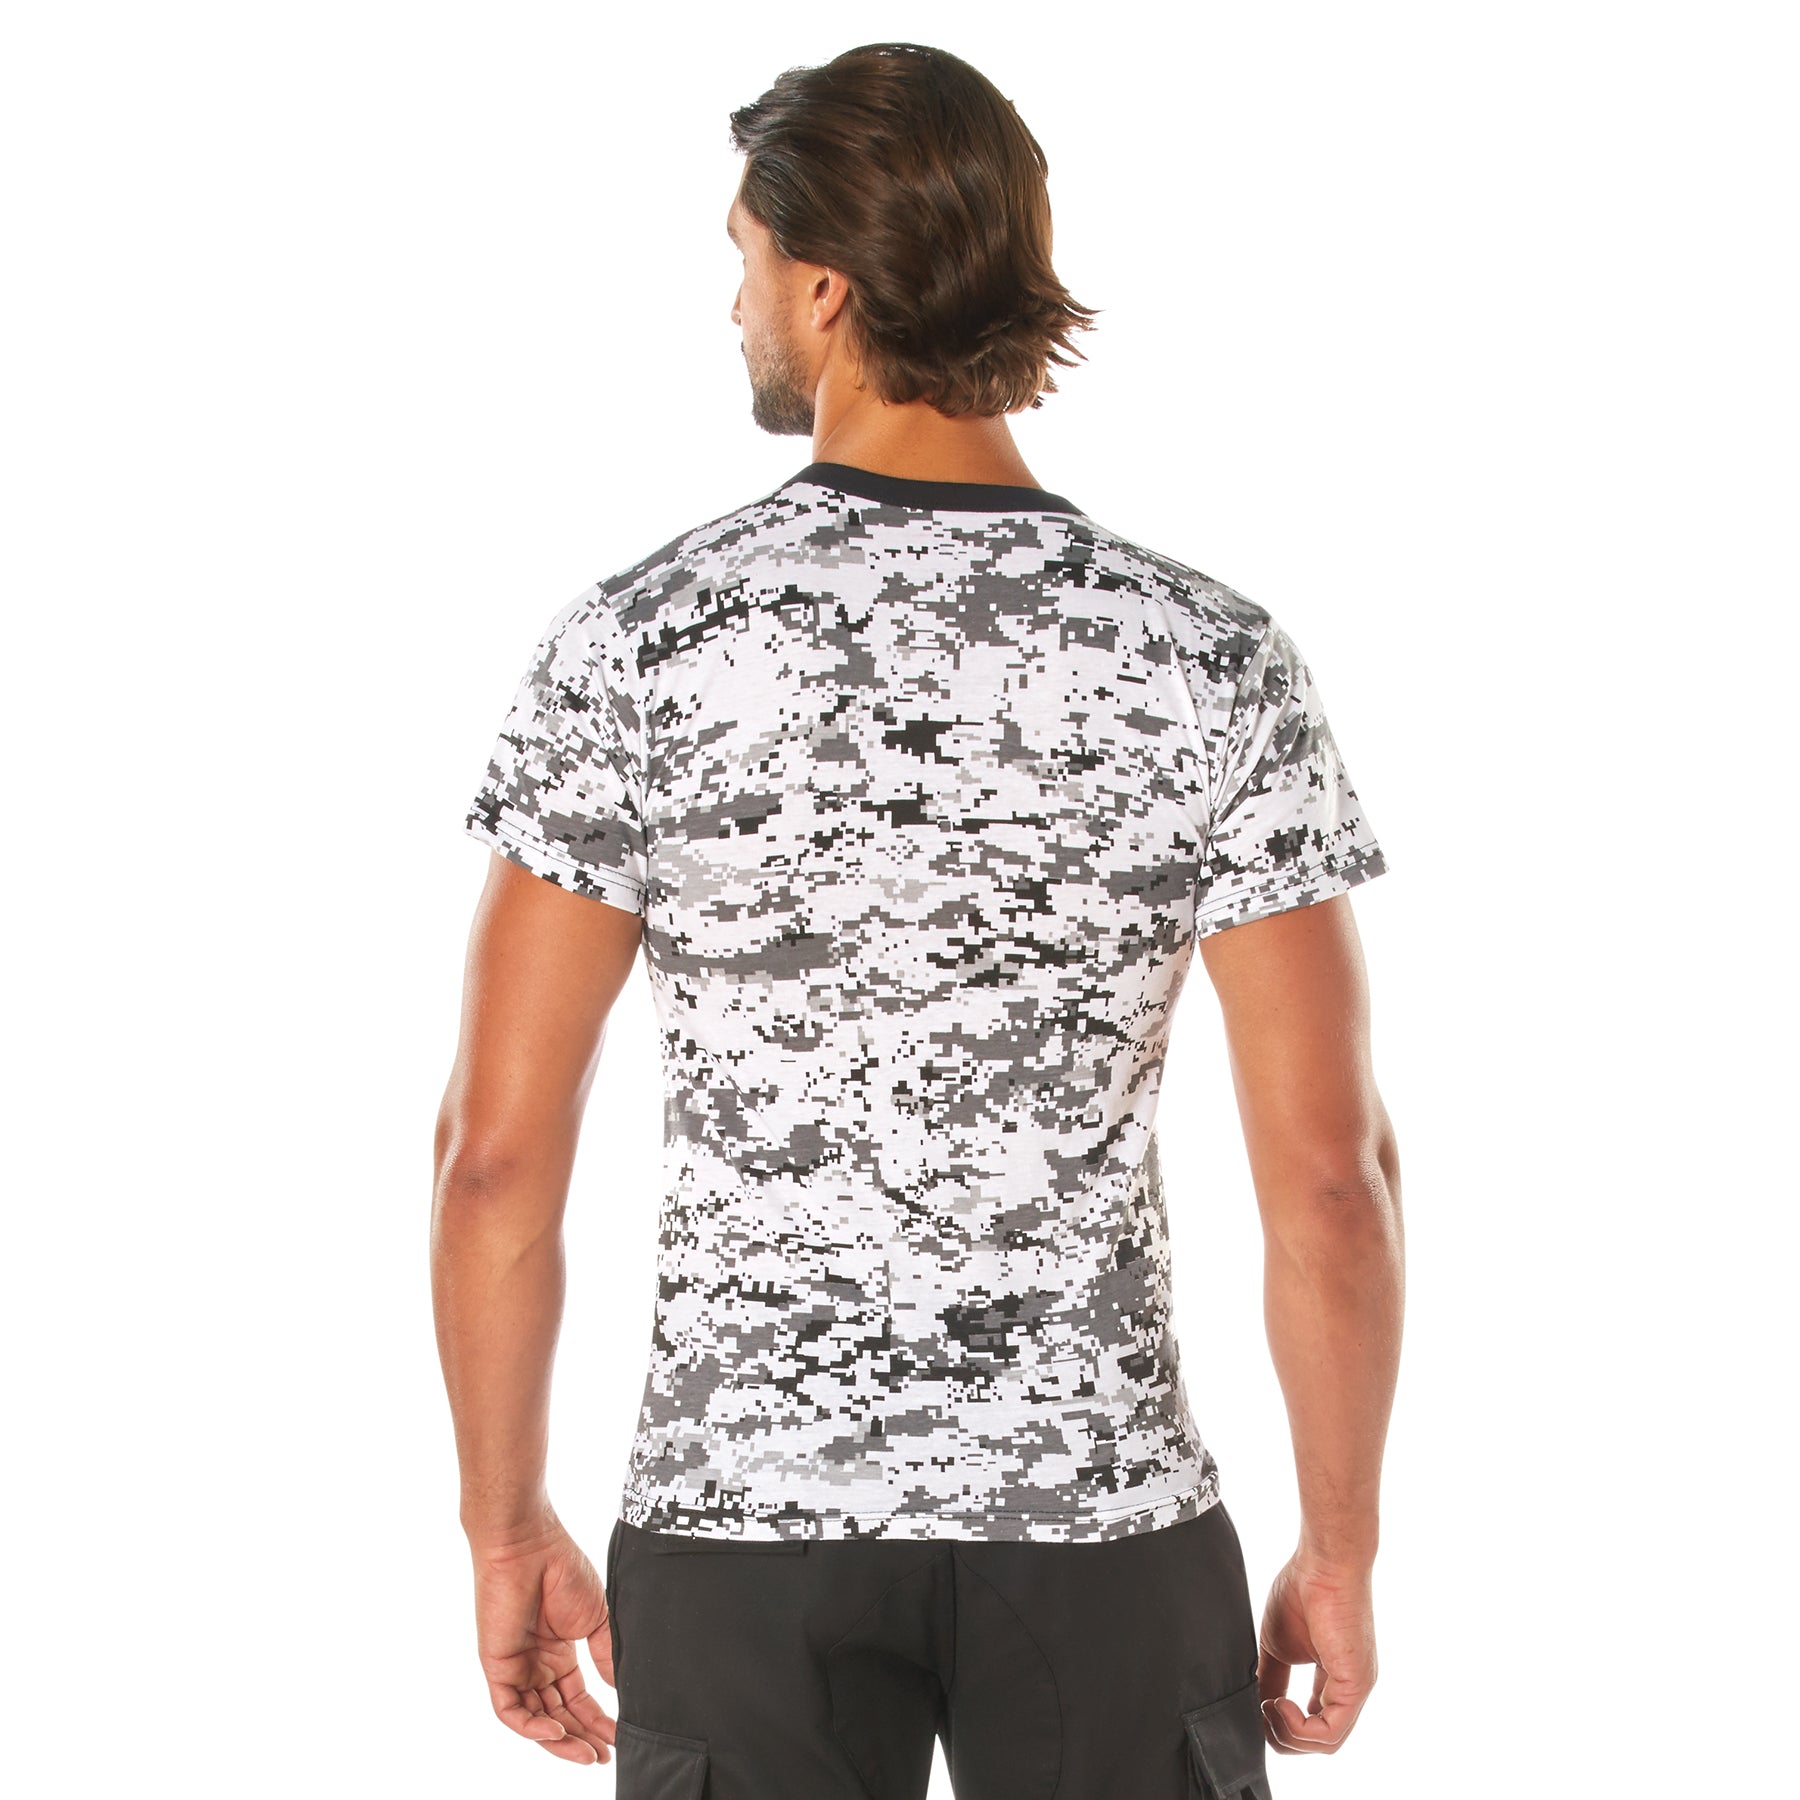 Rothco Digital Camo T-Shirt - Tactical Choice Plus